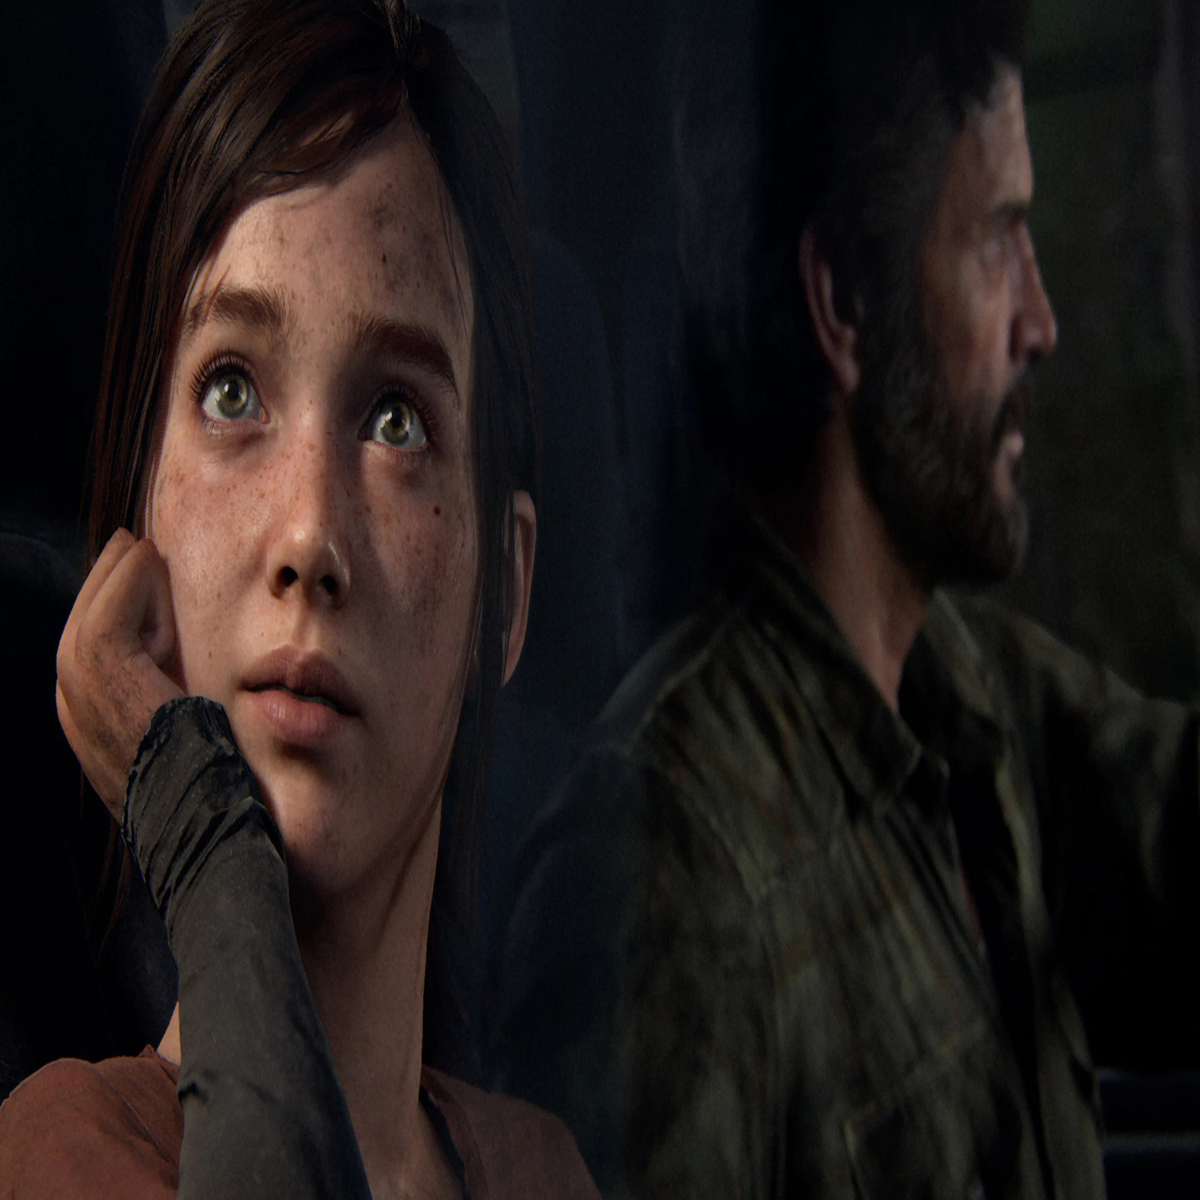 The Last of Us Part 1 PC hotfix patches fullscreen crashes - The SportsRush